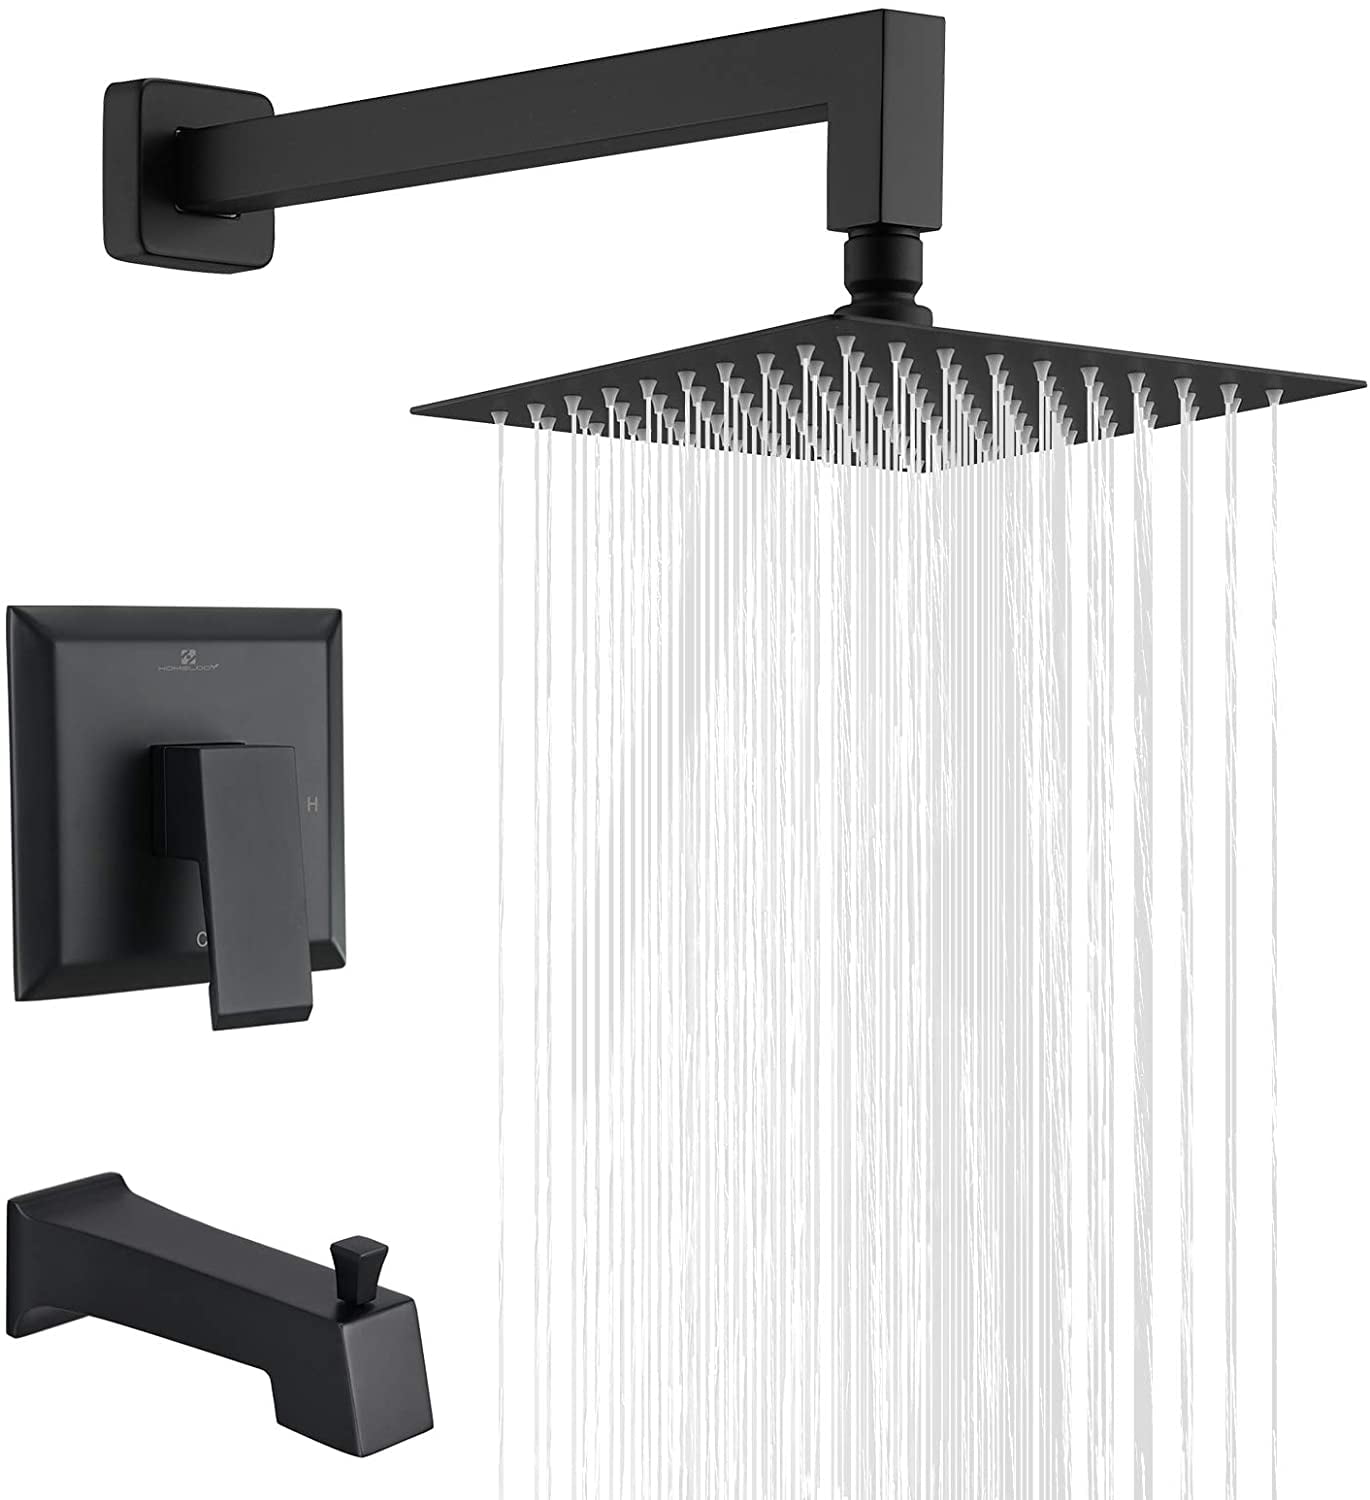 Chrome Bathroom Shower Faucet Set 8"Wall Mount Rainfall Shower Head+Hand Sprayer 